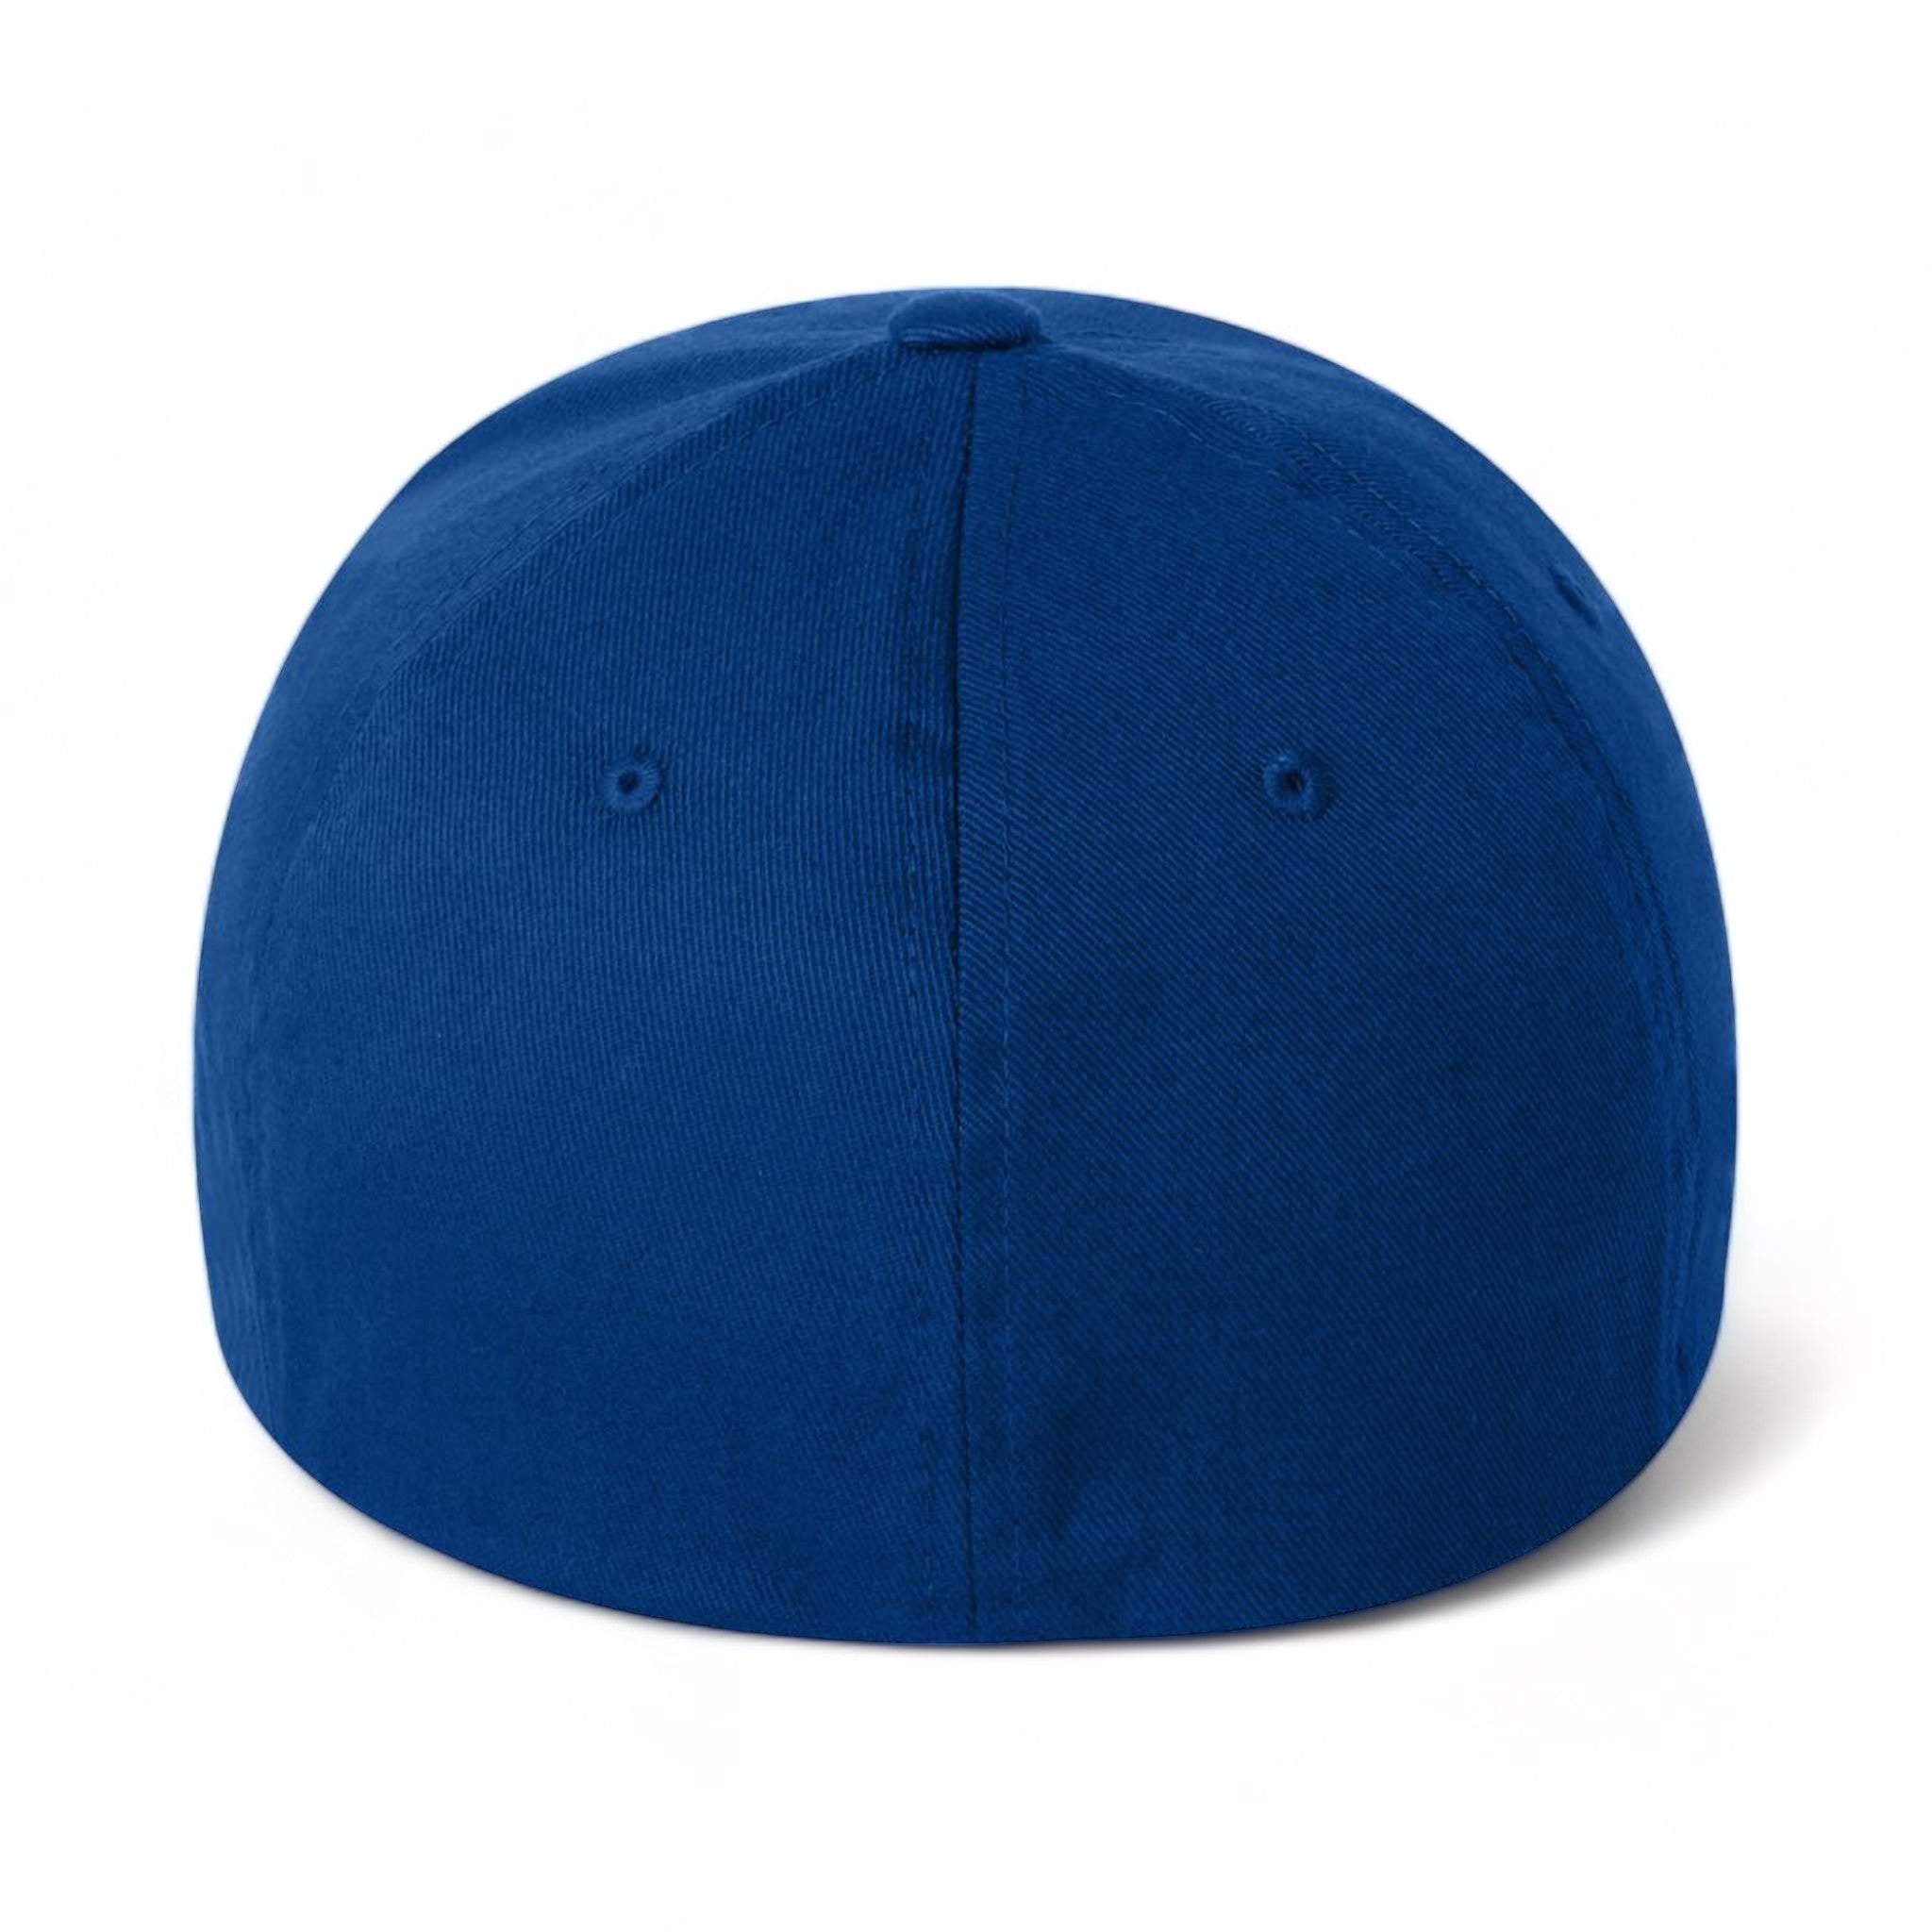 Back view of Flexfit 6277 custom hat in royal blue